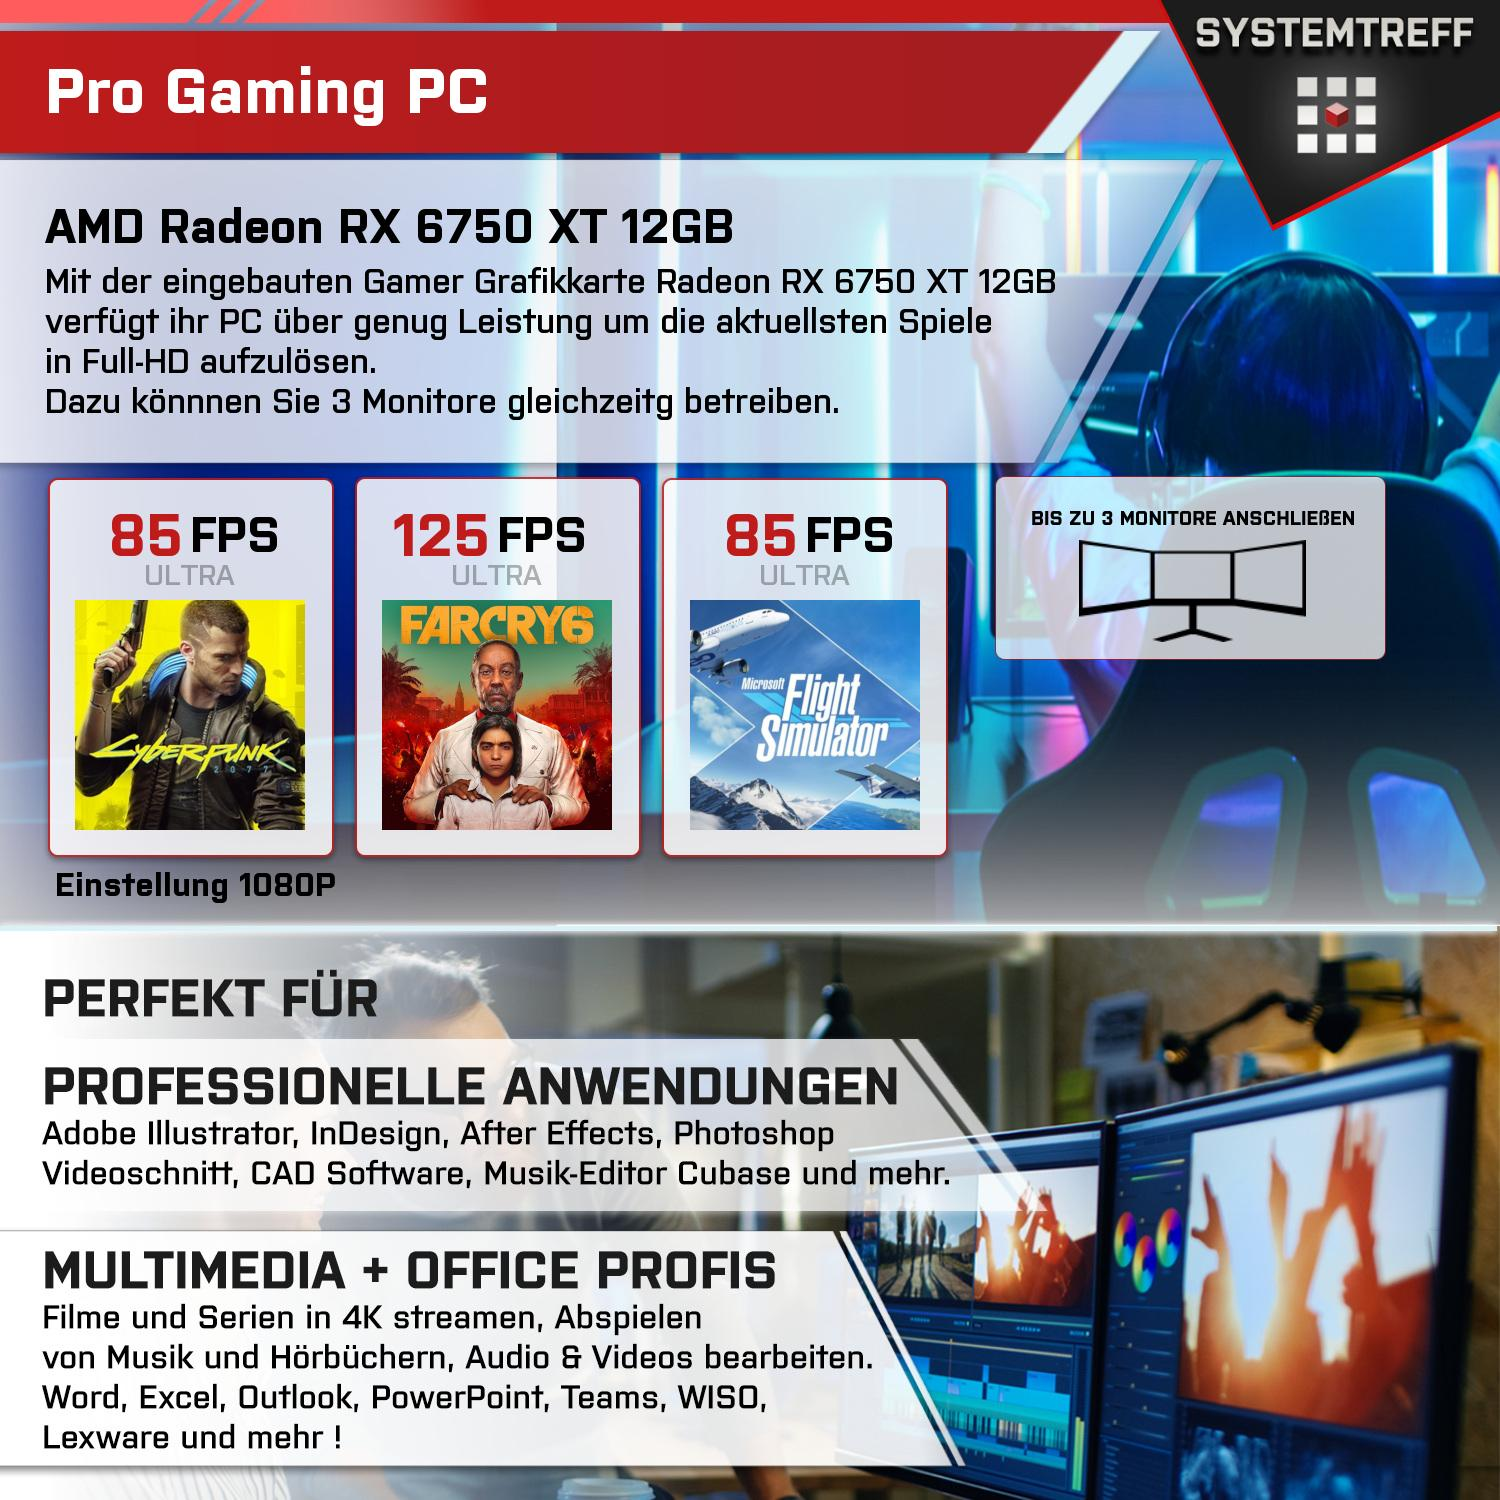 SYSTEMTREFF Pro Gaming AMD Ryzen GB GB 9 Radeon™ RX Ryzen™ Prozessor, mSSD, 1000 Pro, AMD Gaming Windows XT 6750 AMD 16 PC 11 5900X, RAM, 9 mit